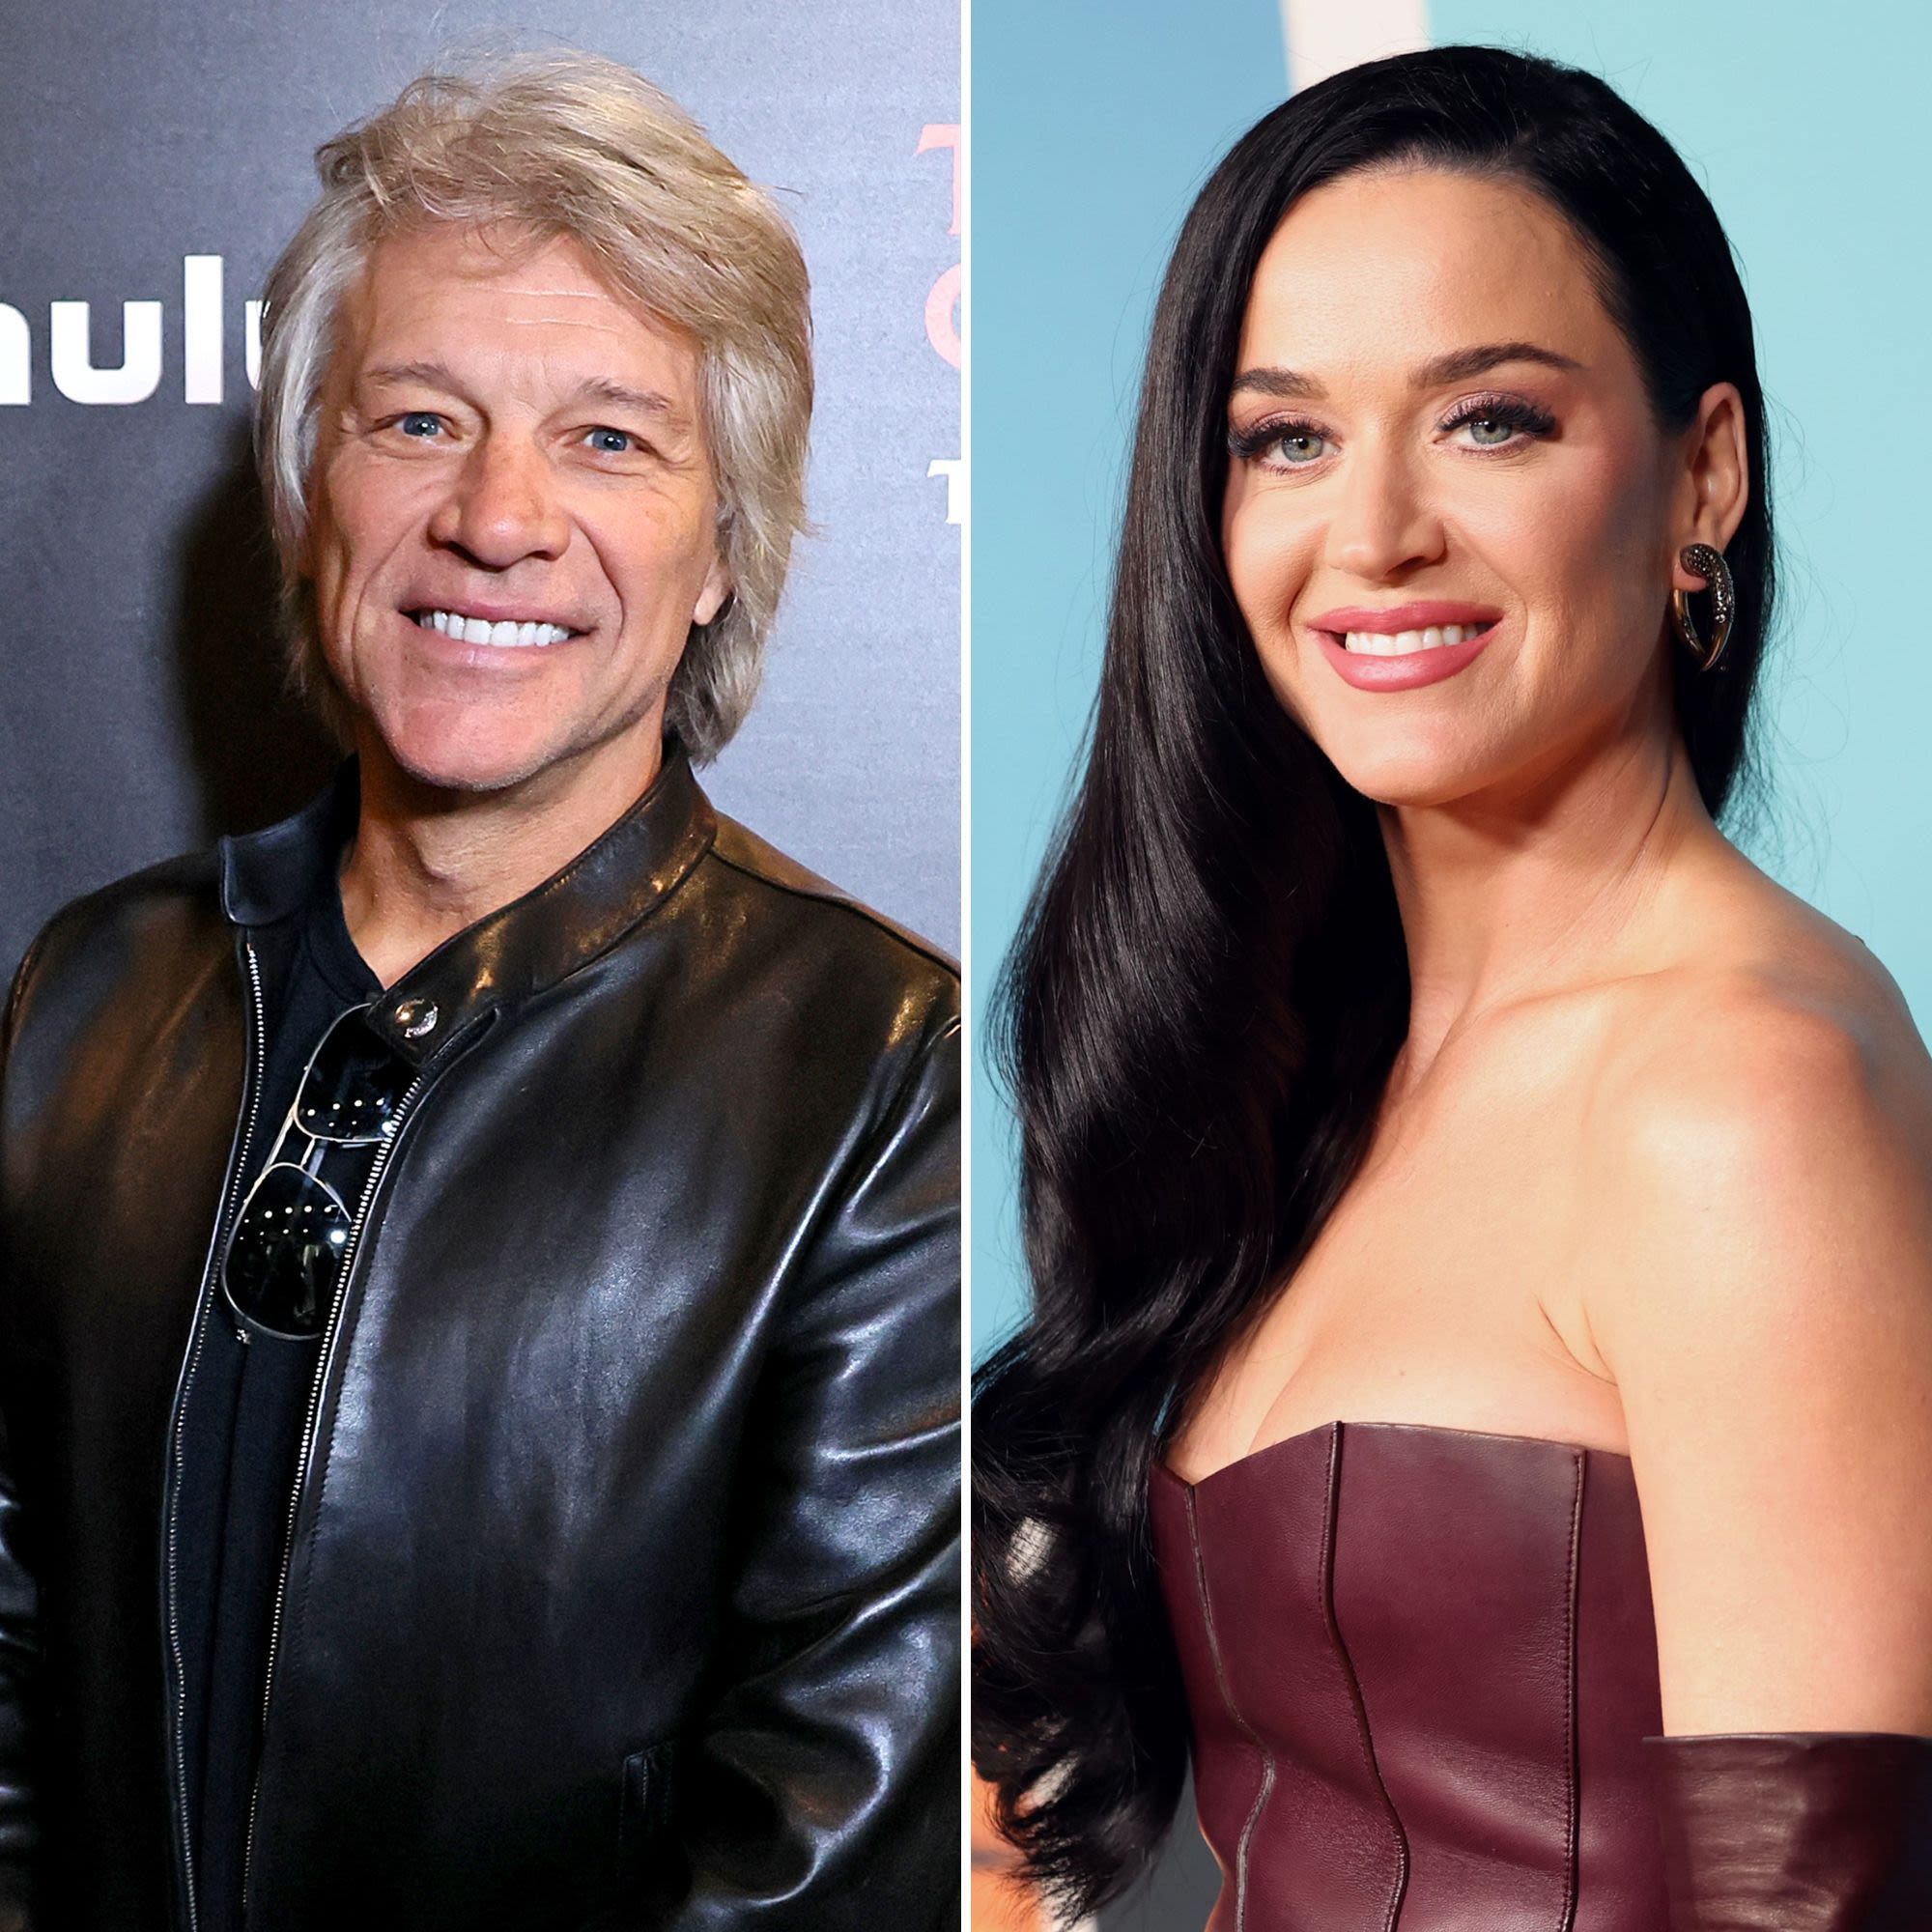 Jon Bon Jovi Is ‘Top Contender to Succeed’ Katy Perry as Judge on ‘American Idol’